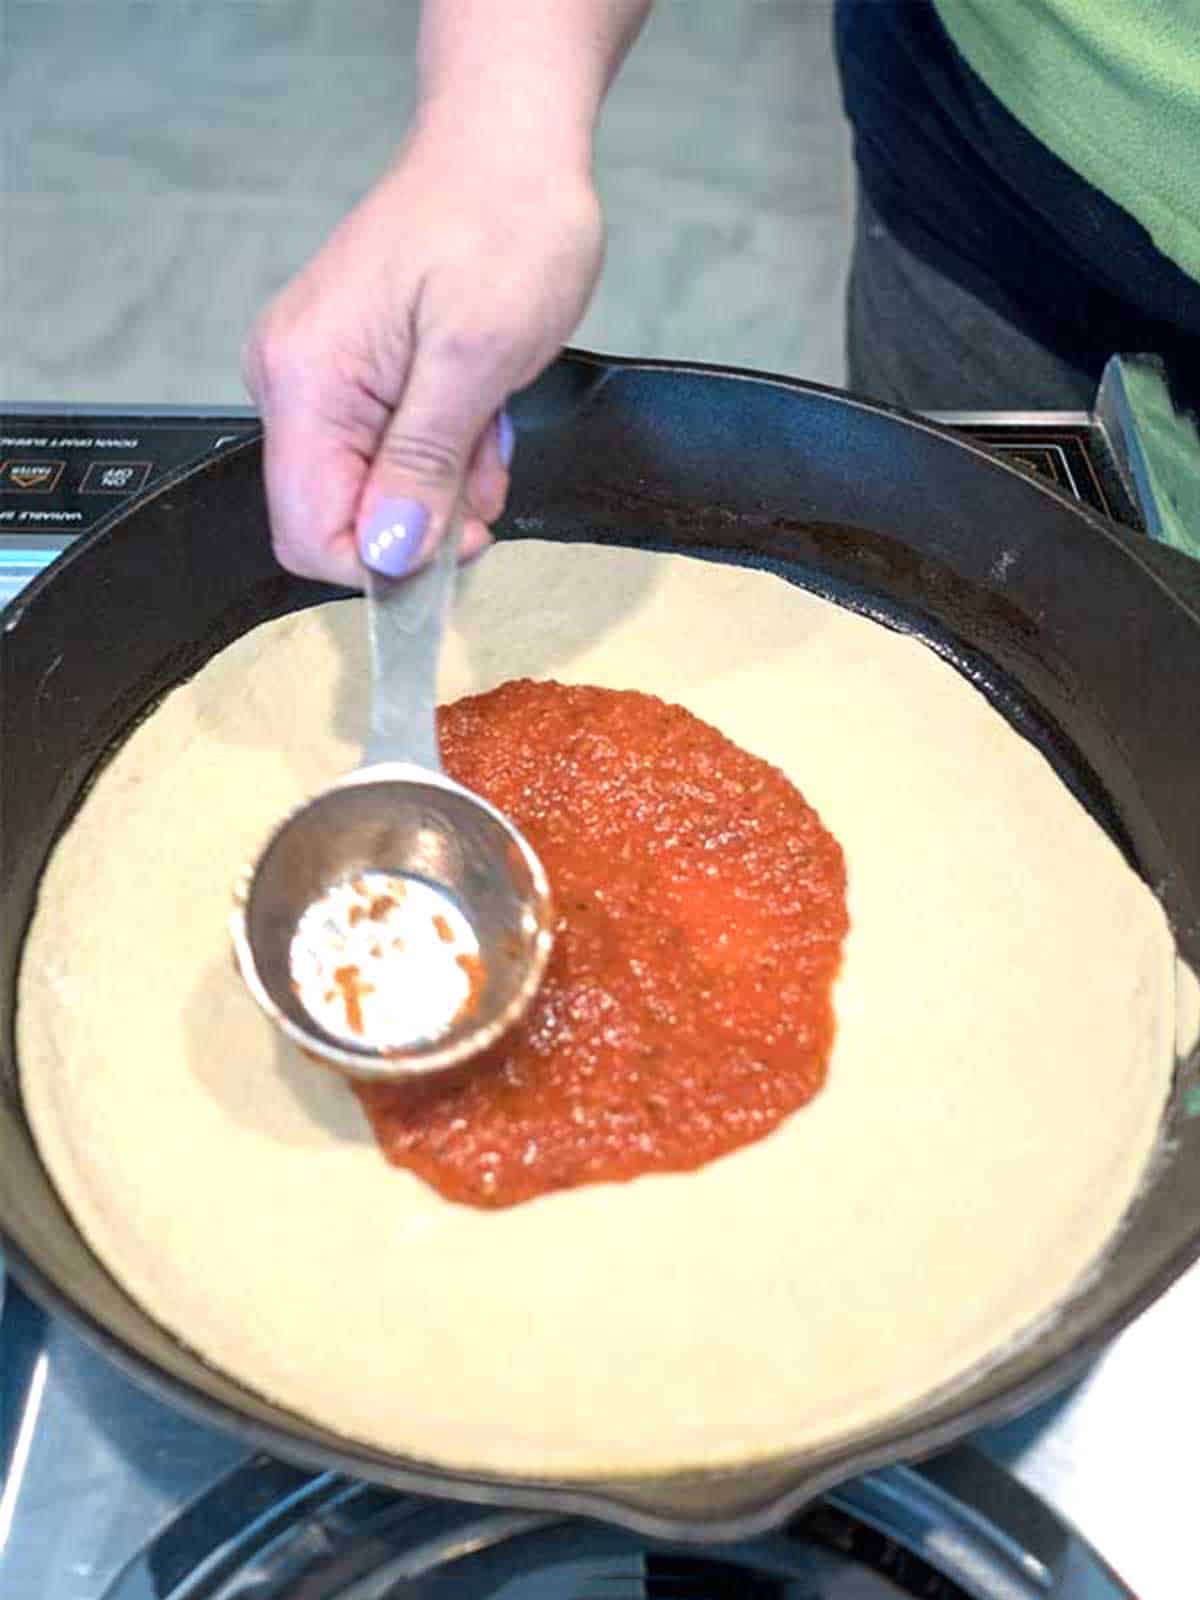 Spreading pizza sauce on dough.